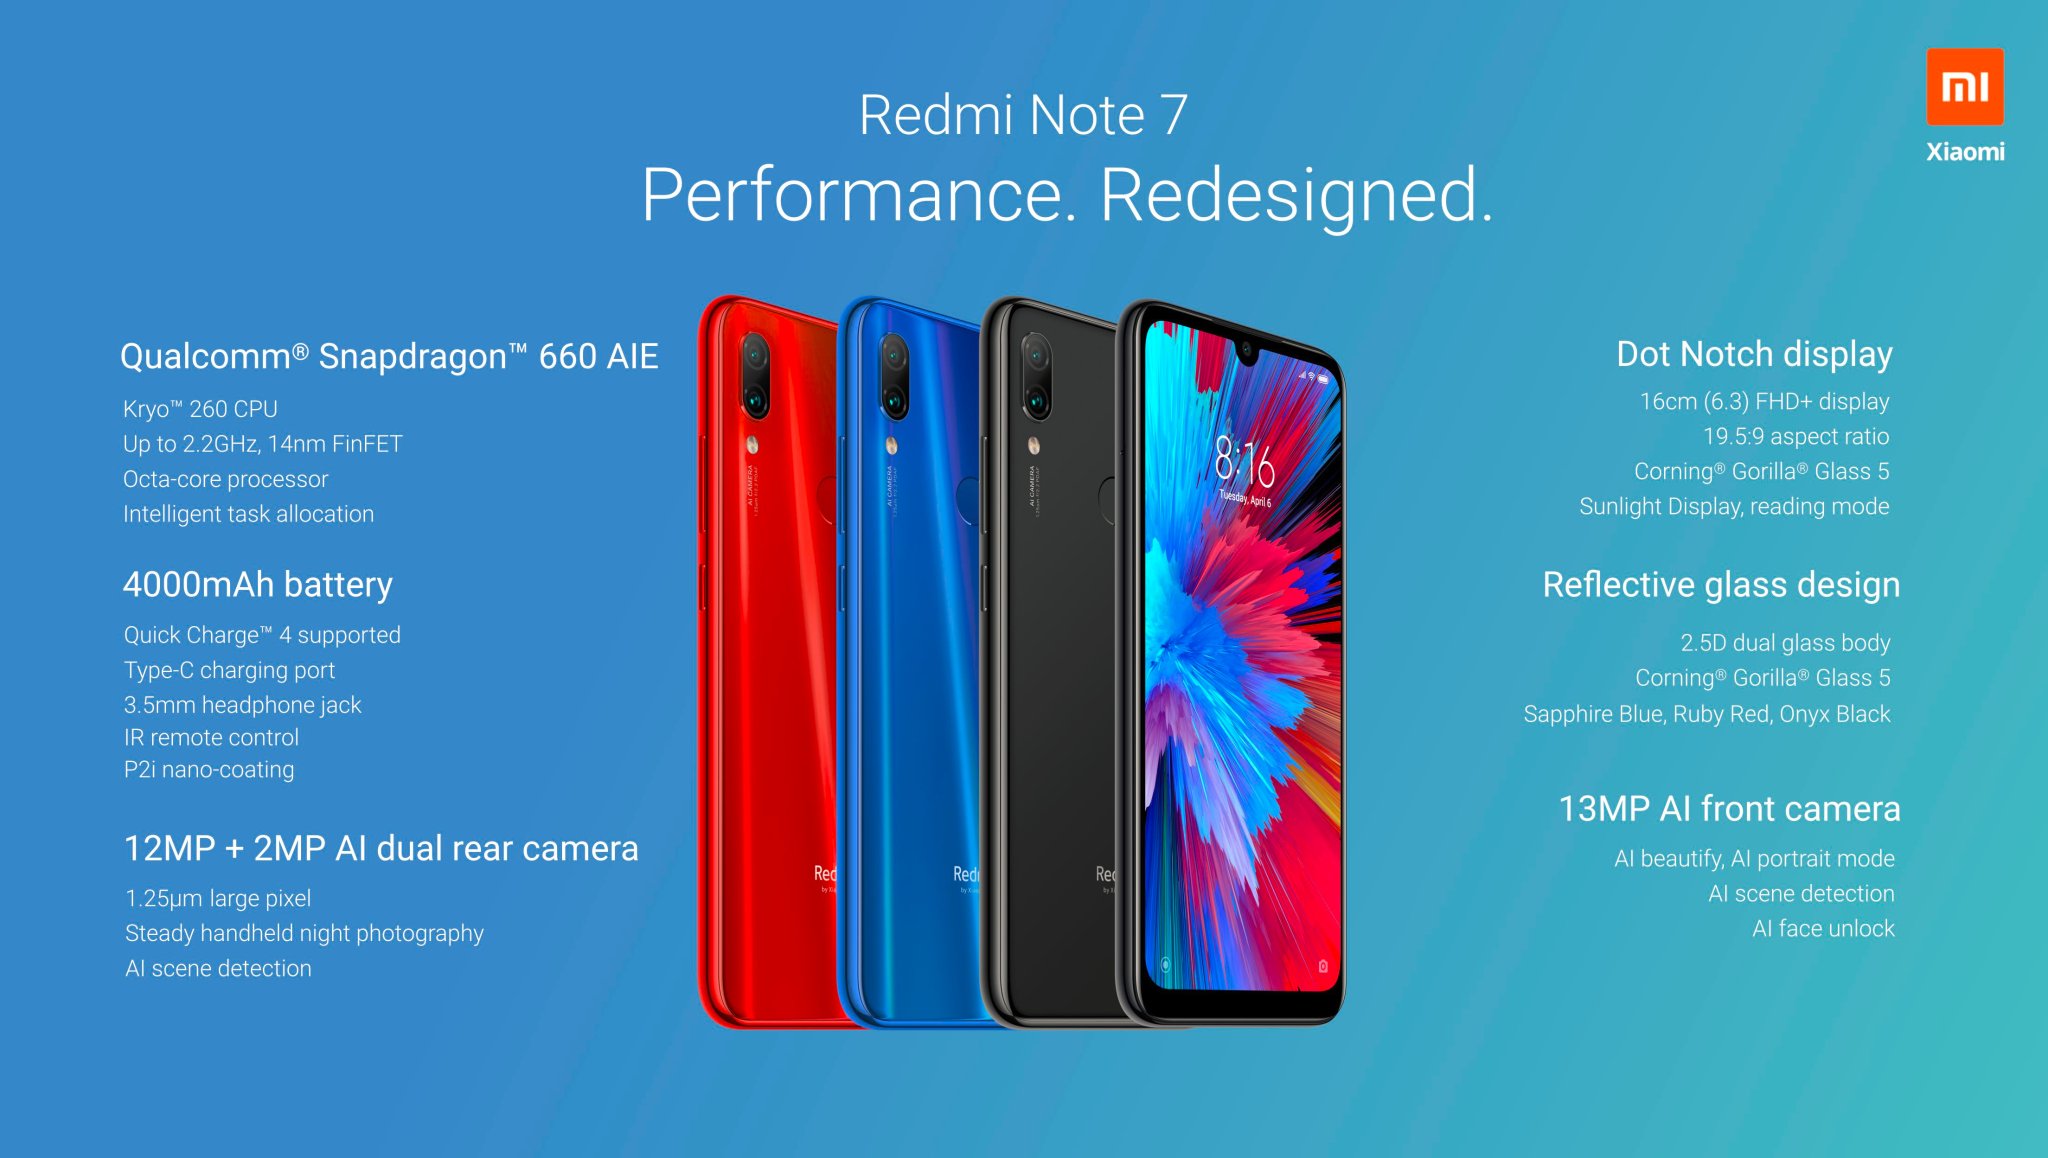 Redmi Note 5 Snapdragon